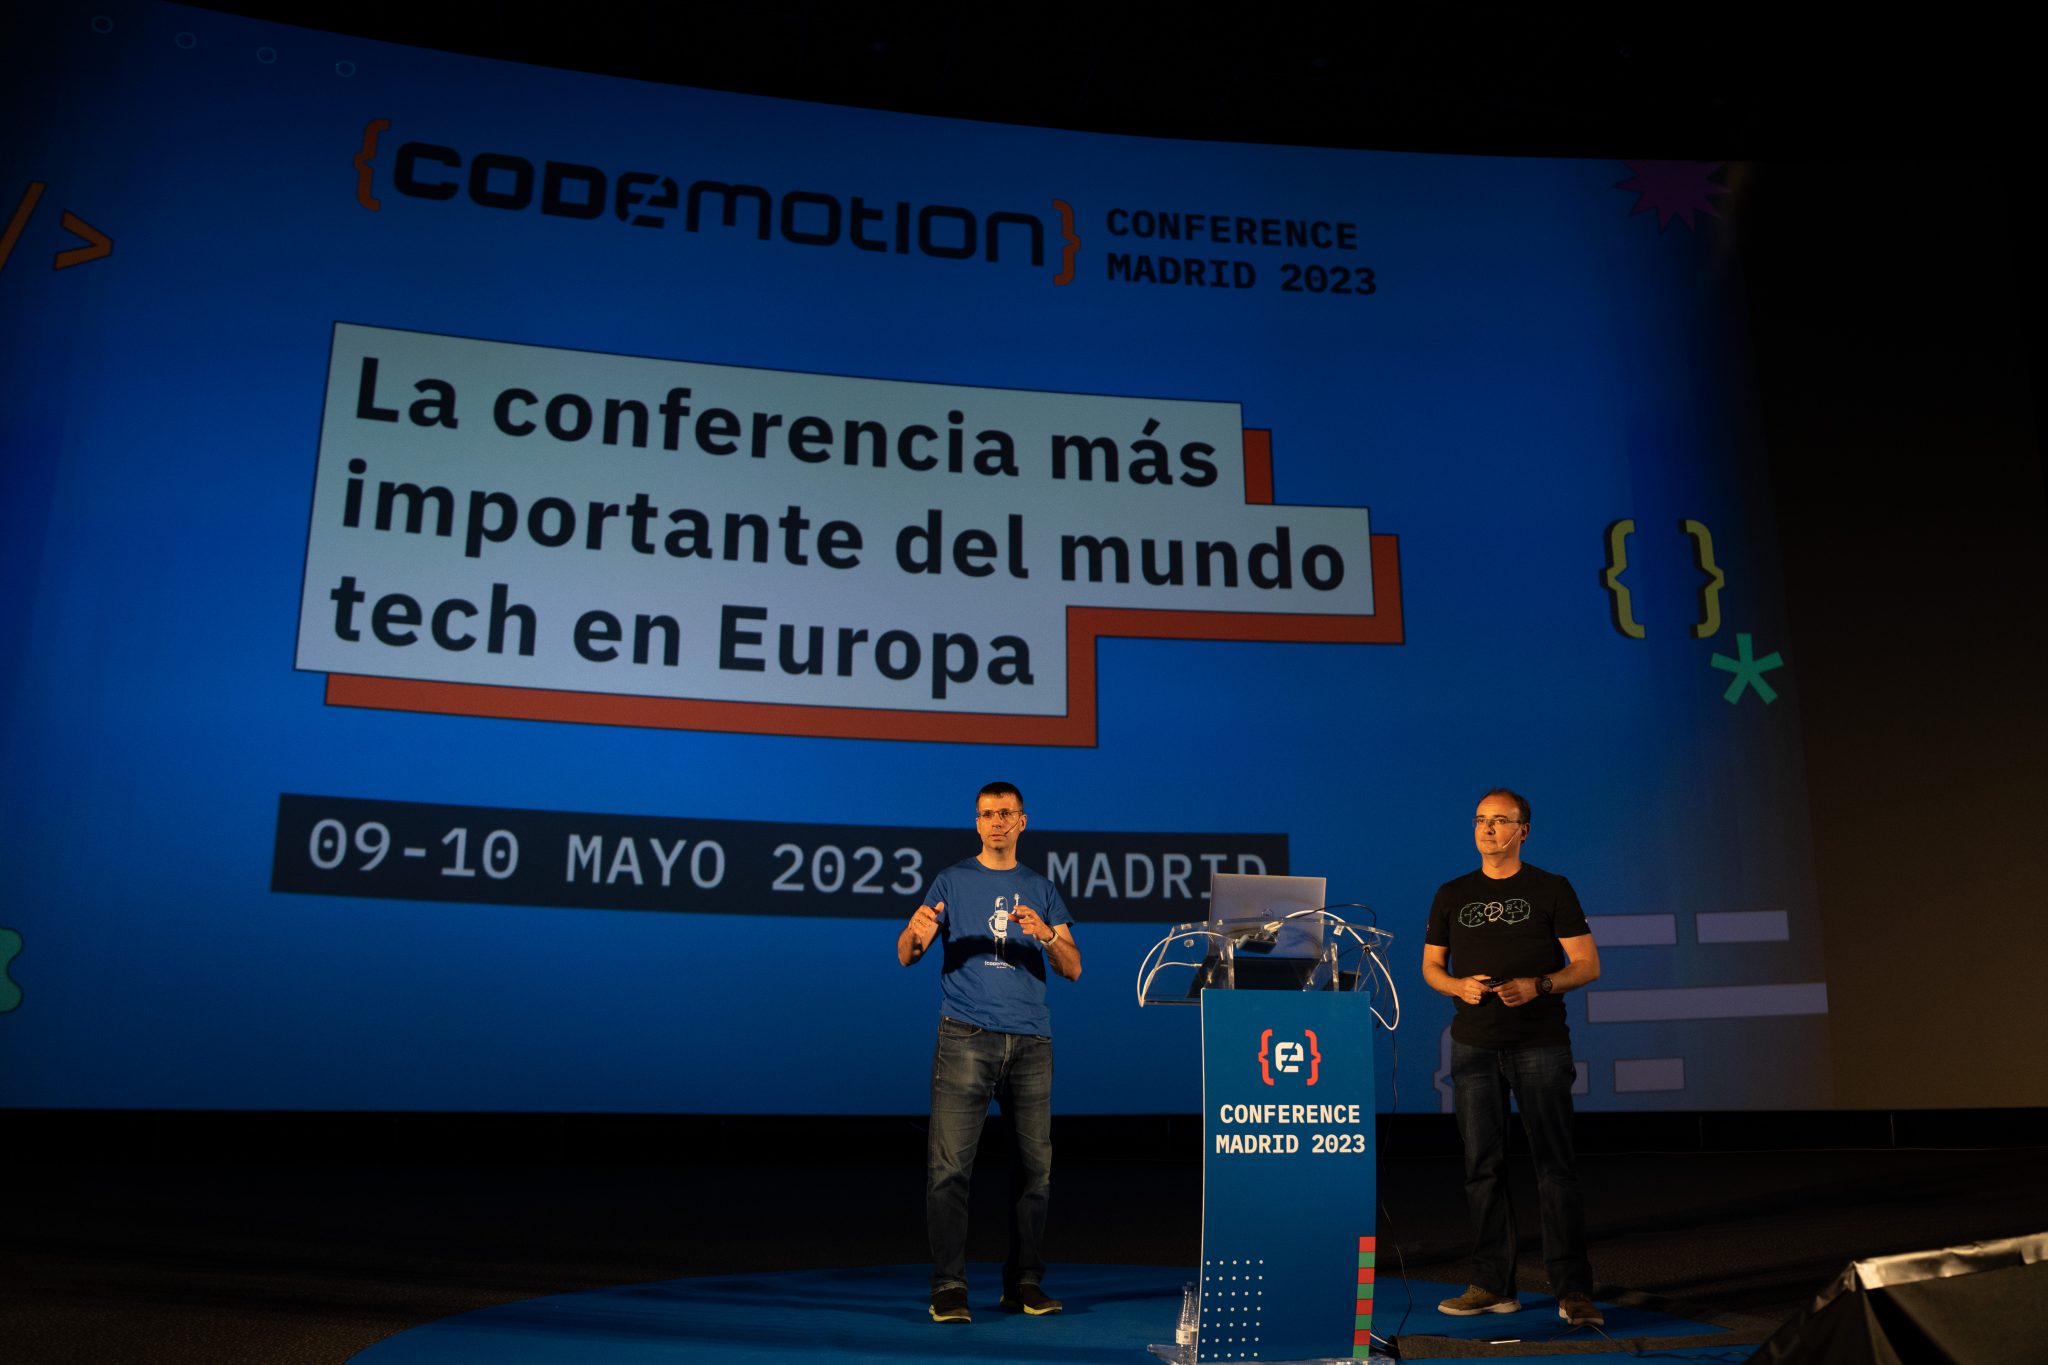 CODEMOTION - Conference Madrid 2023